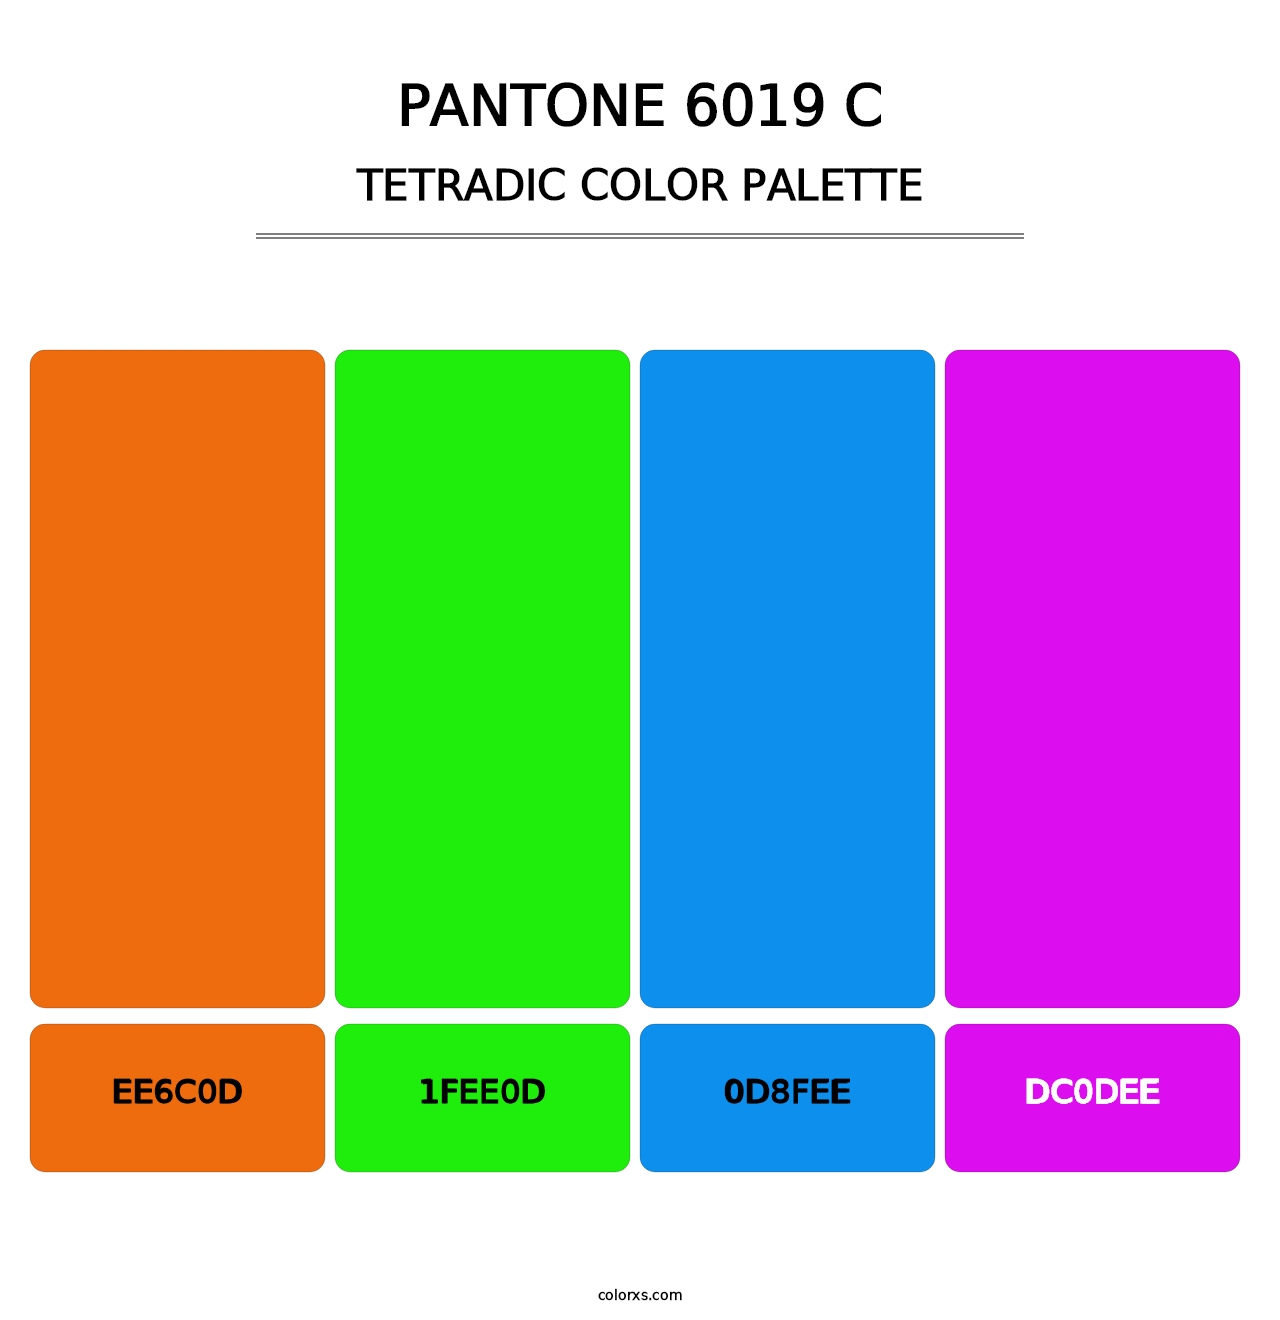 PANTONE 6019 C - Tetradic Color Palette